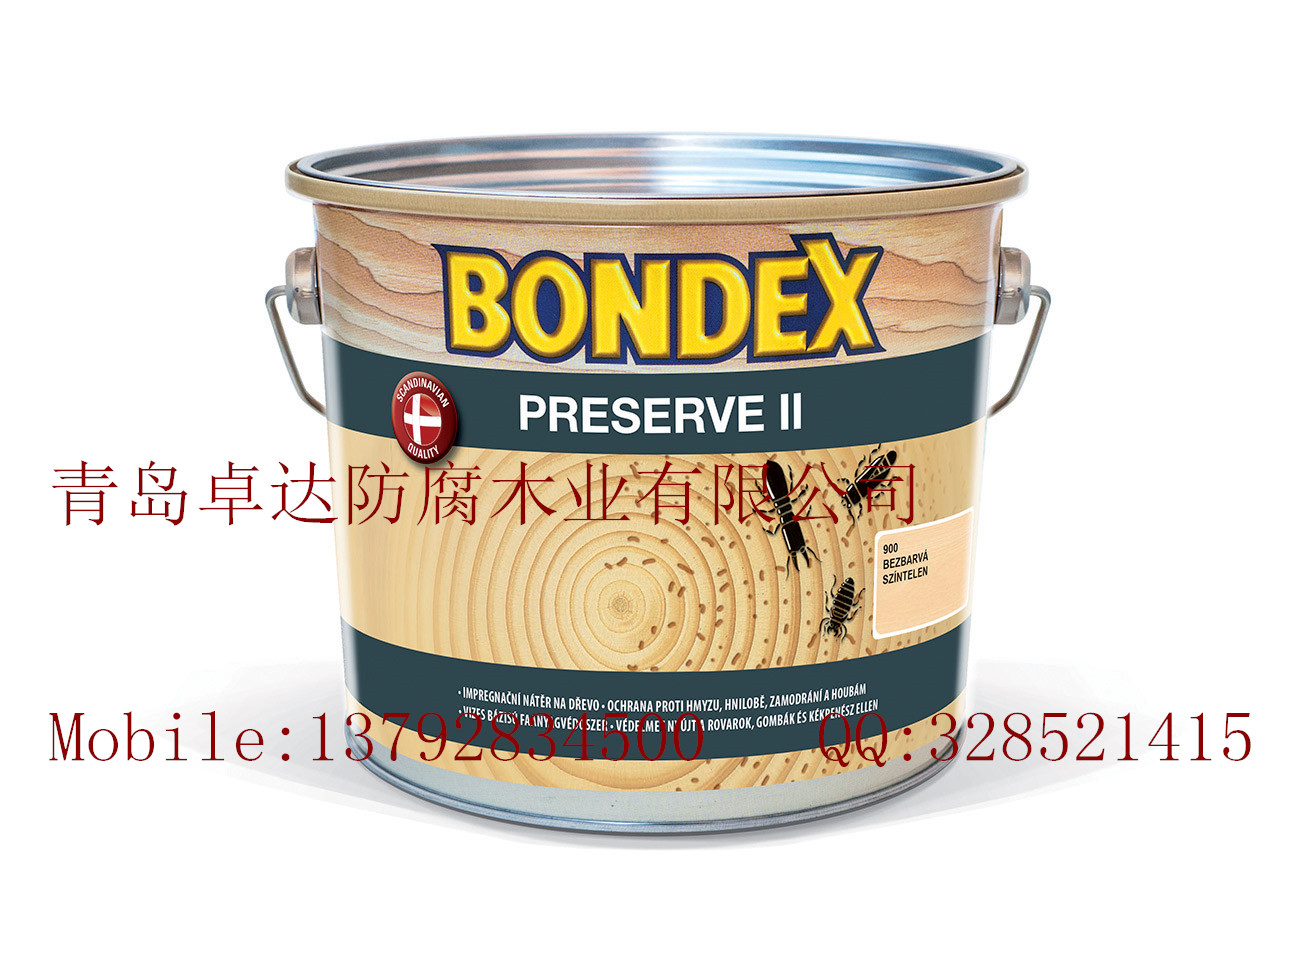 07_Bondex_preserve-II_2_5l.jpg